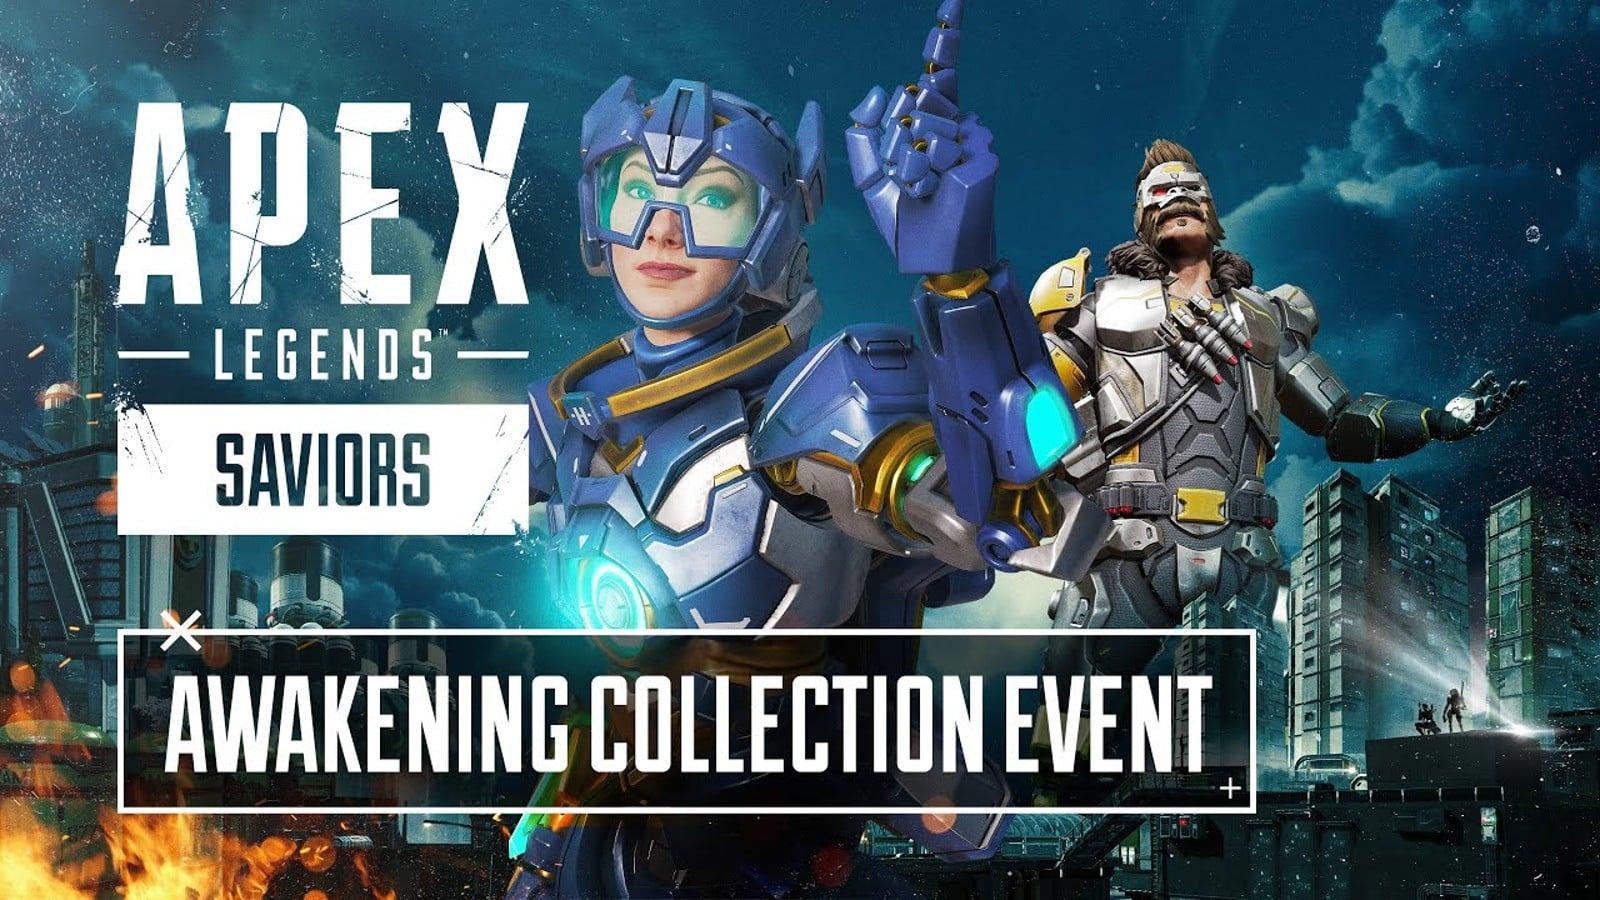 Awakening Collection event Apex Legends